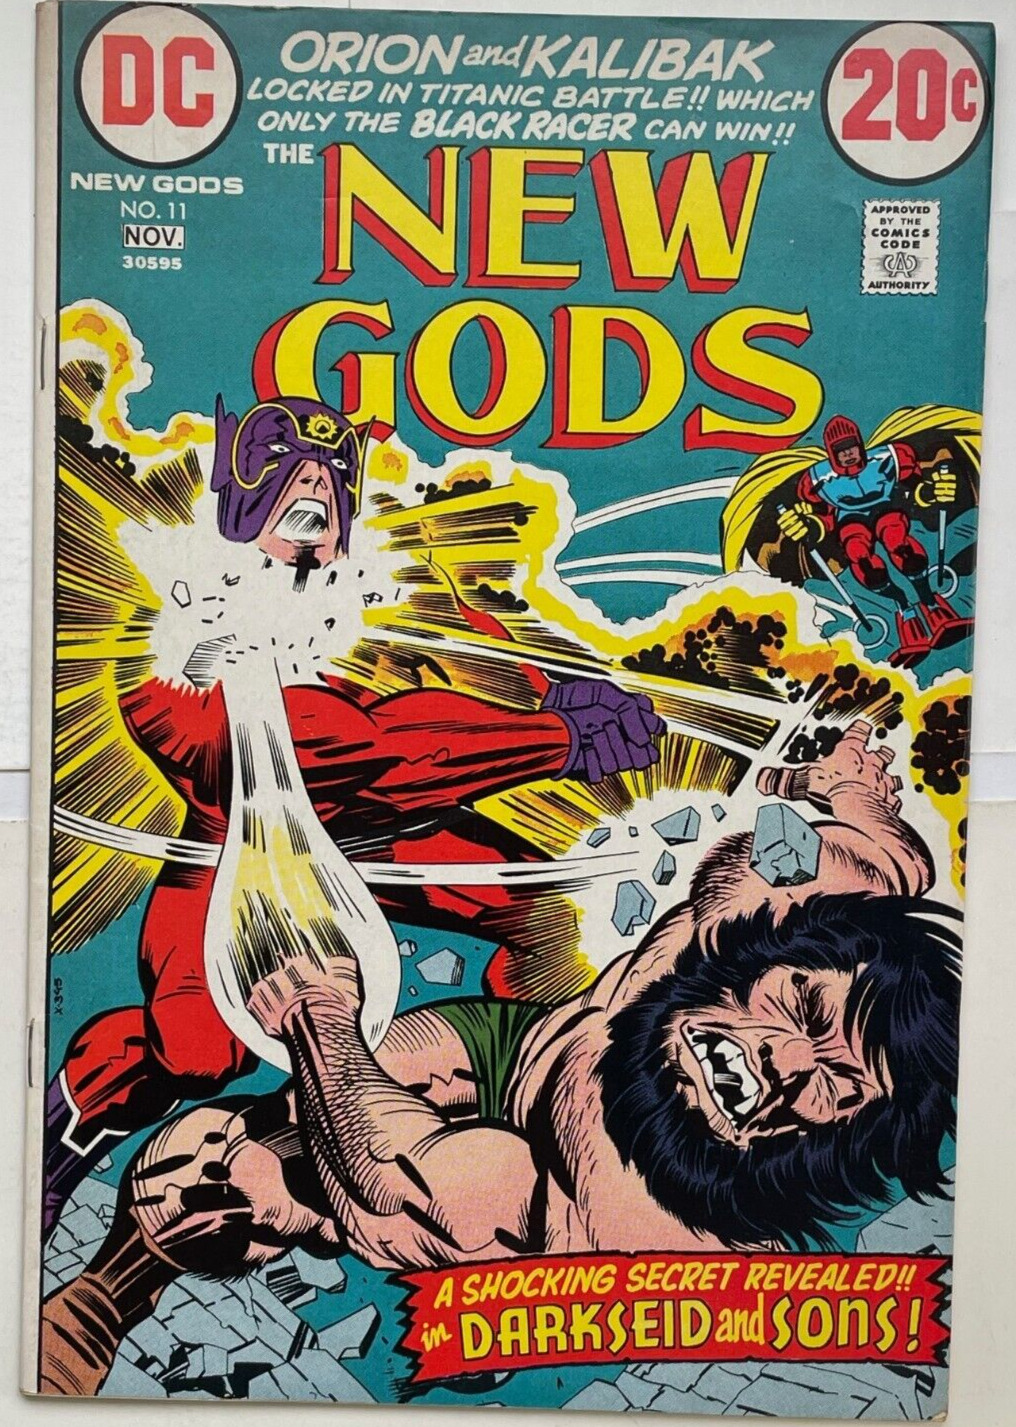 New Gods #11 -DC COMICS -1972 **FINAL KIRBY ISSUE**